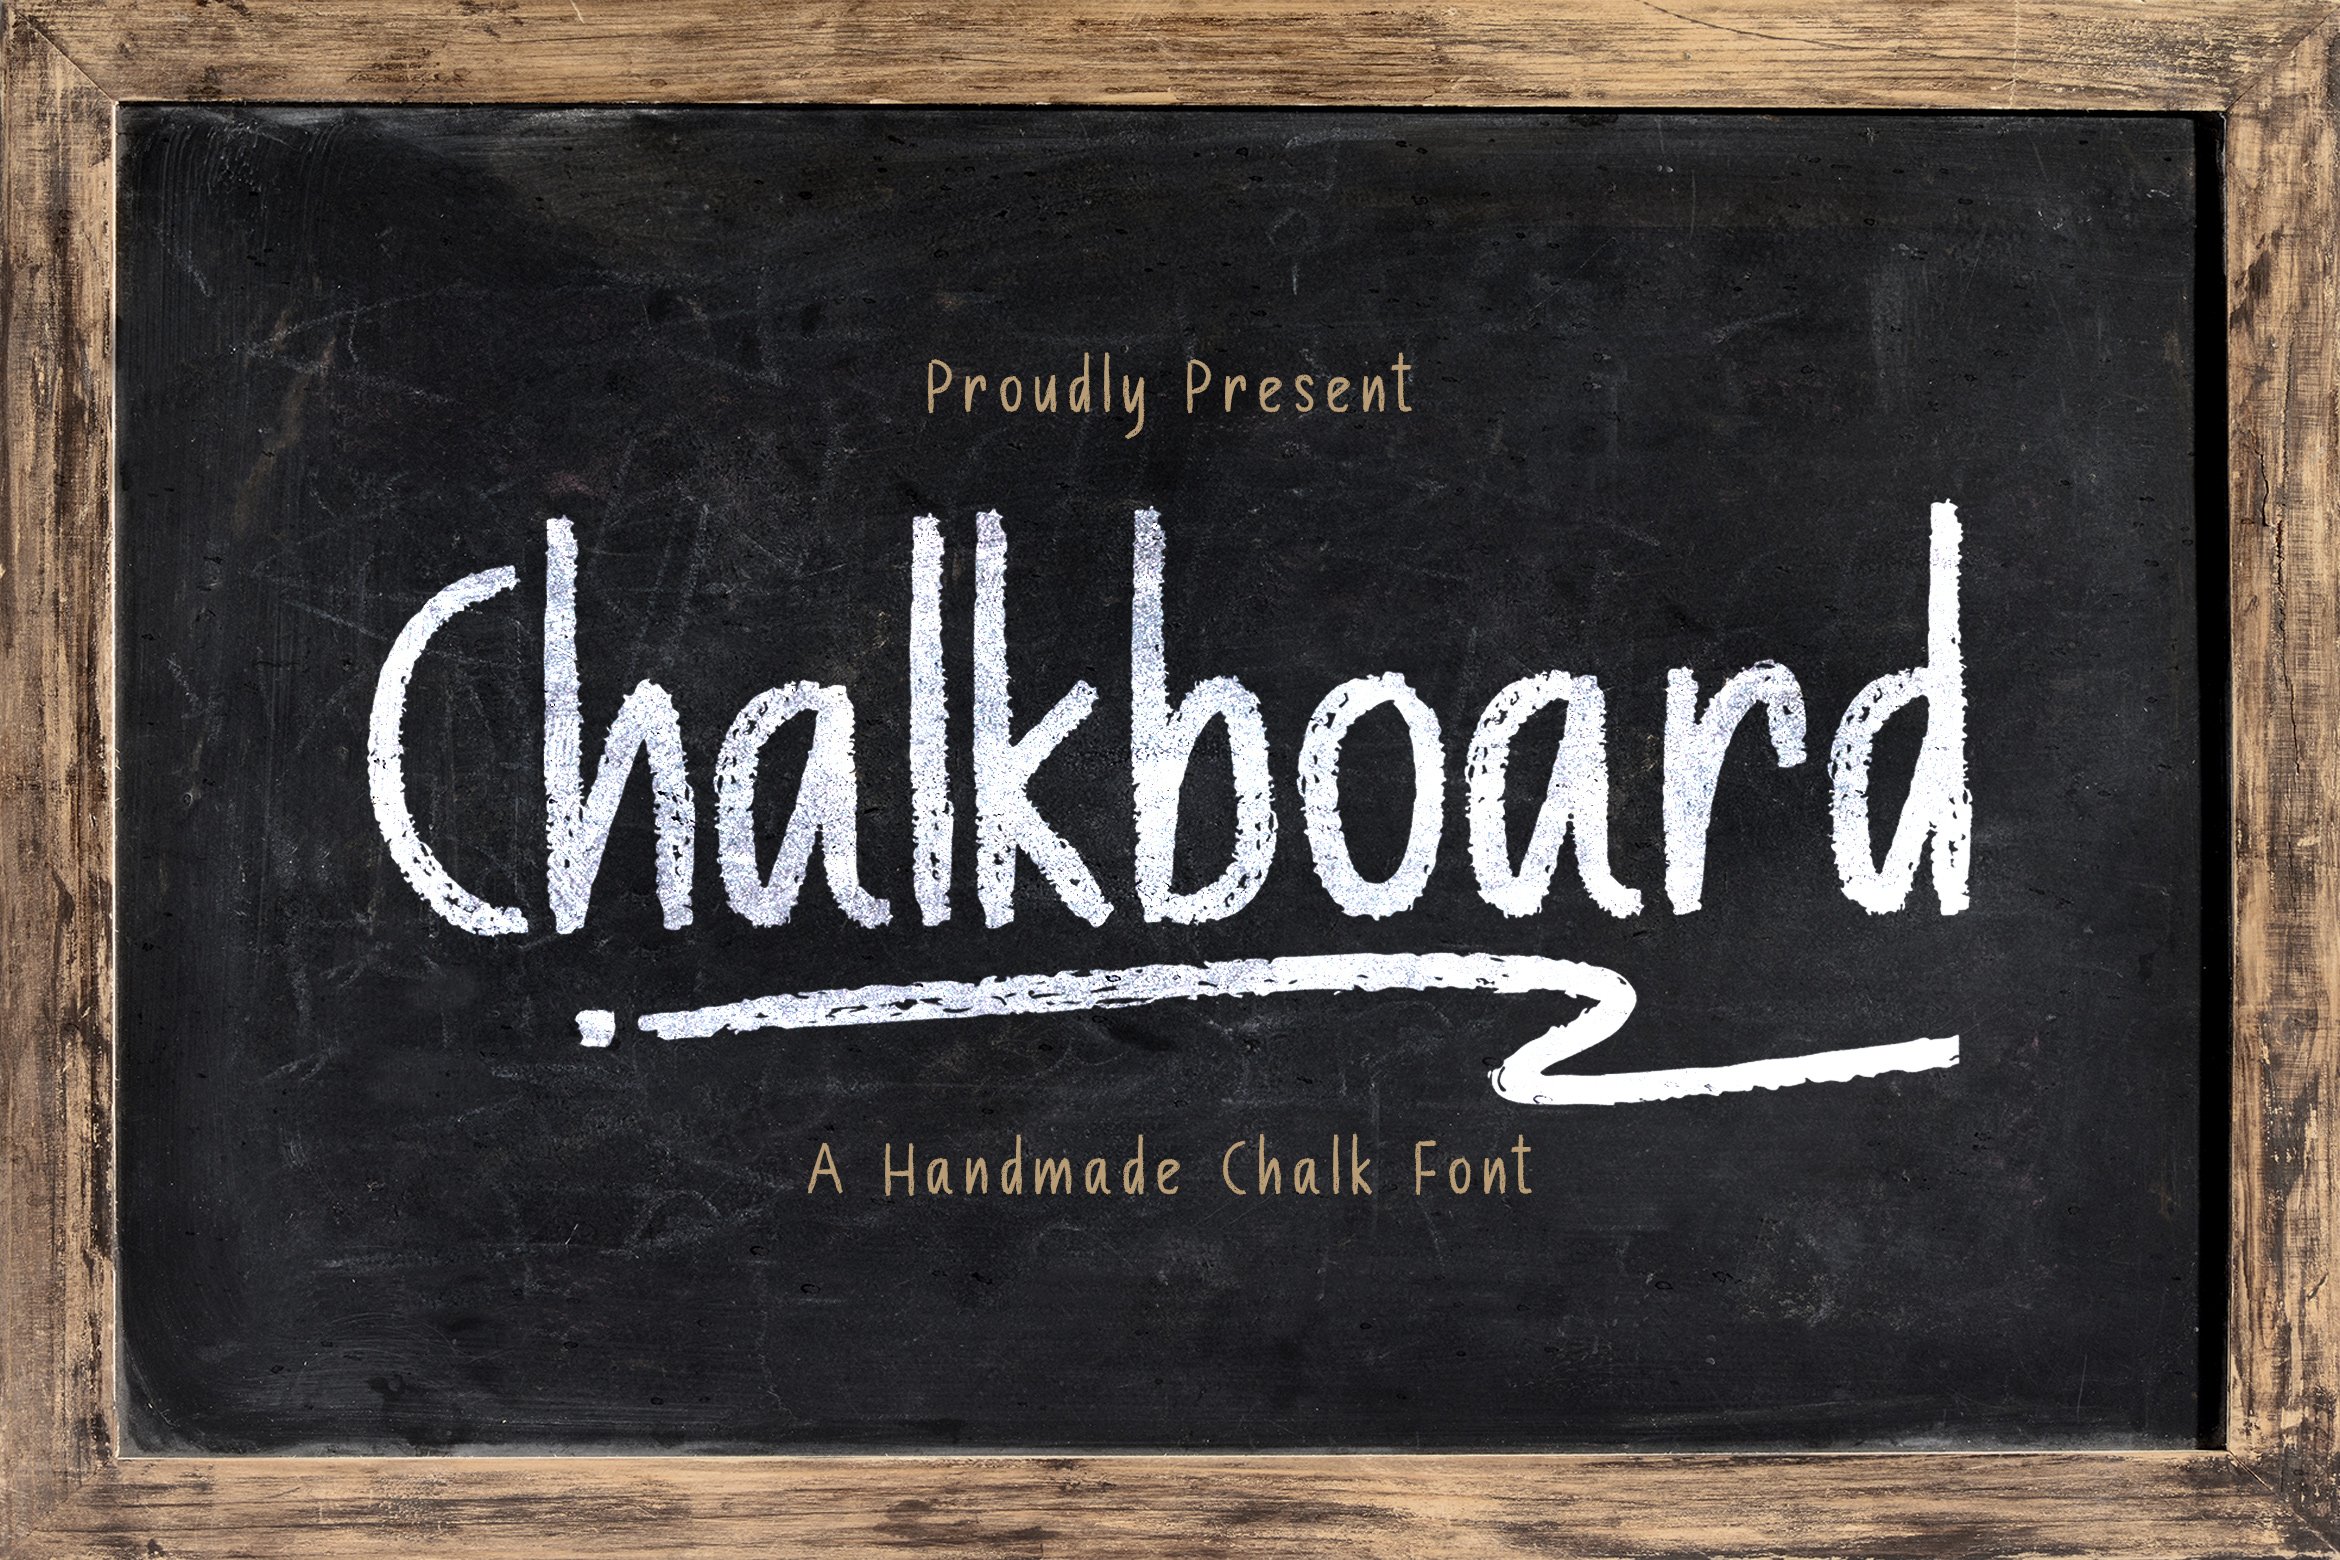 Chalk Board - A Handmade Chalk Font cover image.